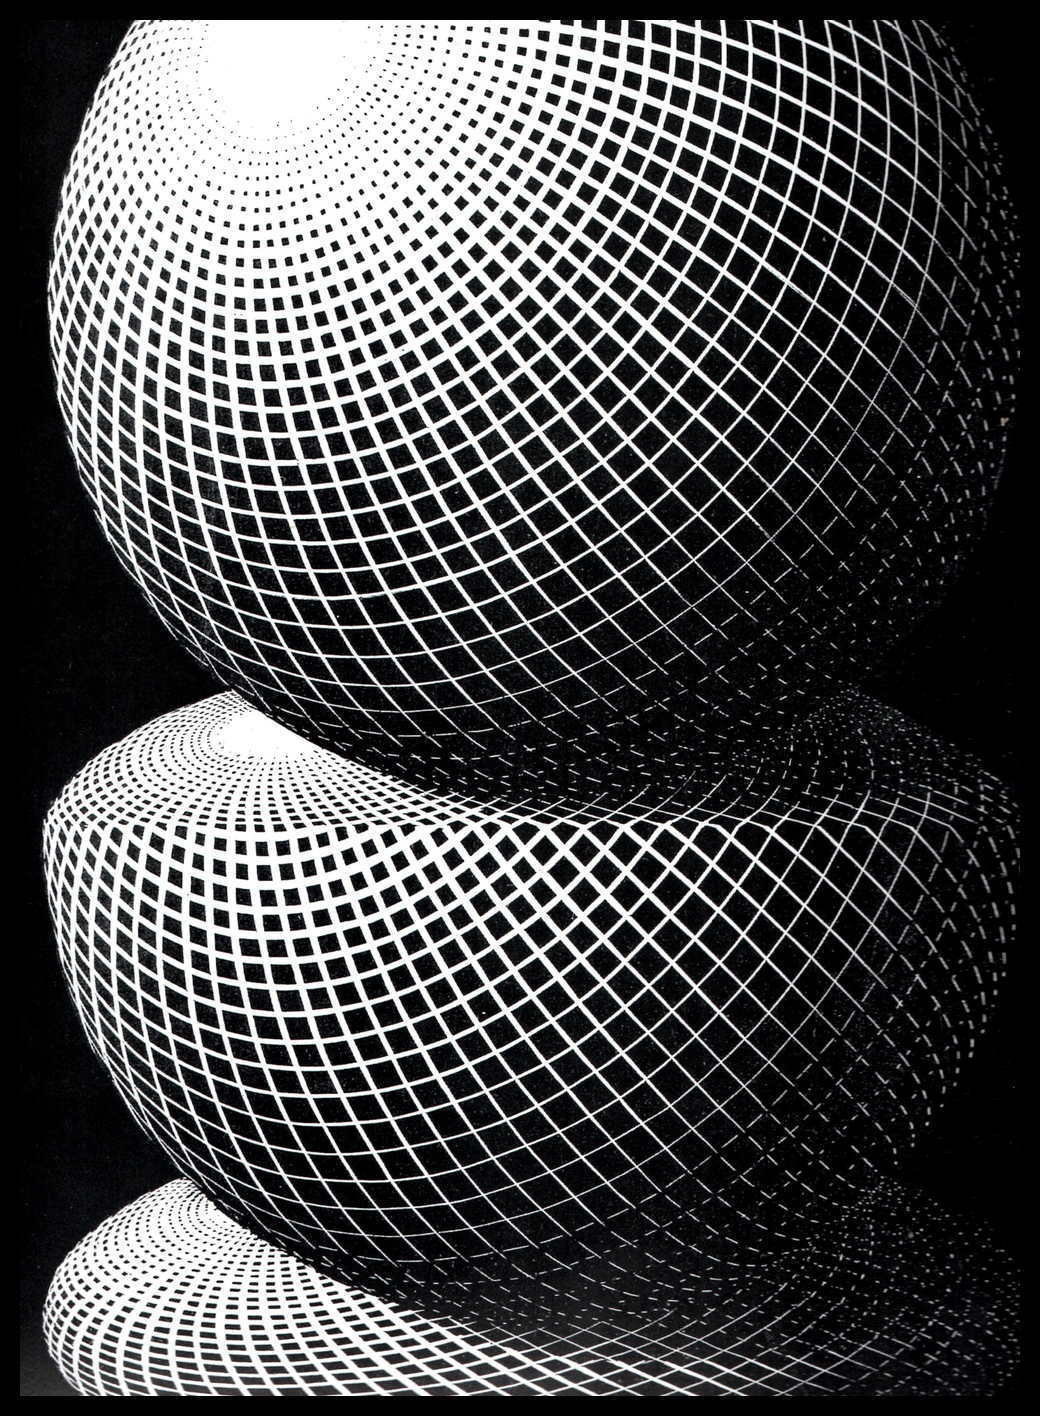 M. C. Escher - Three Spheres I (1945)